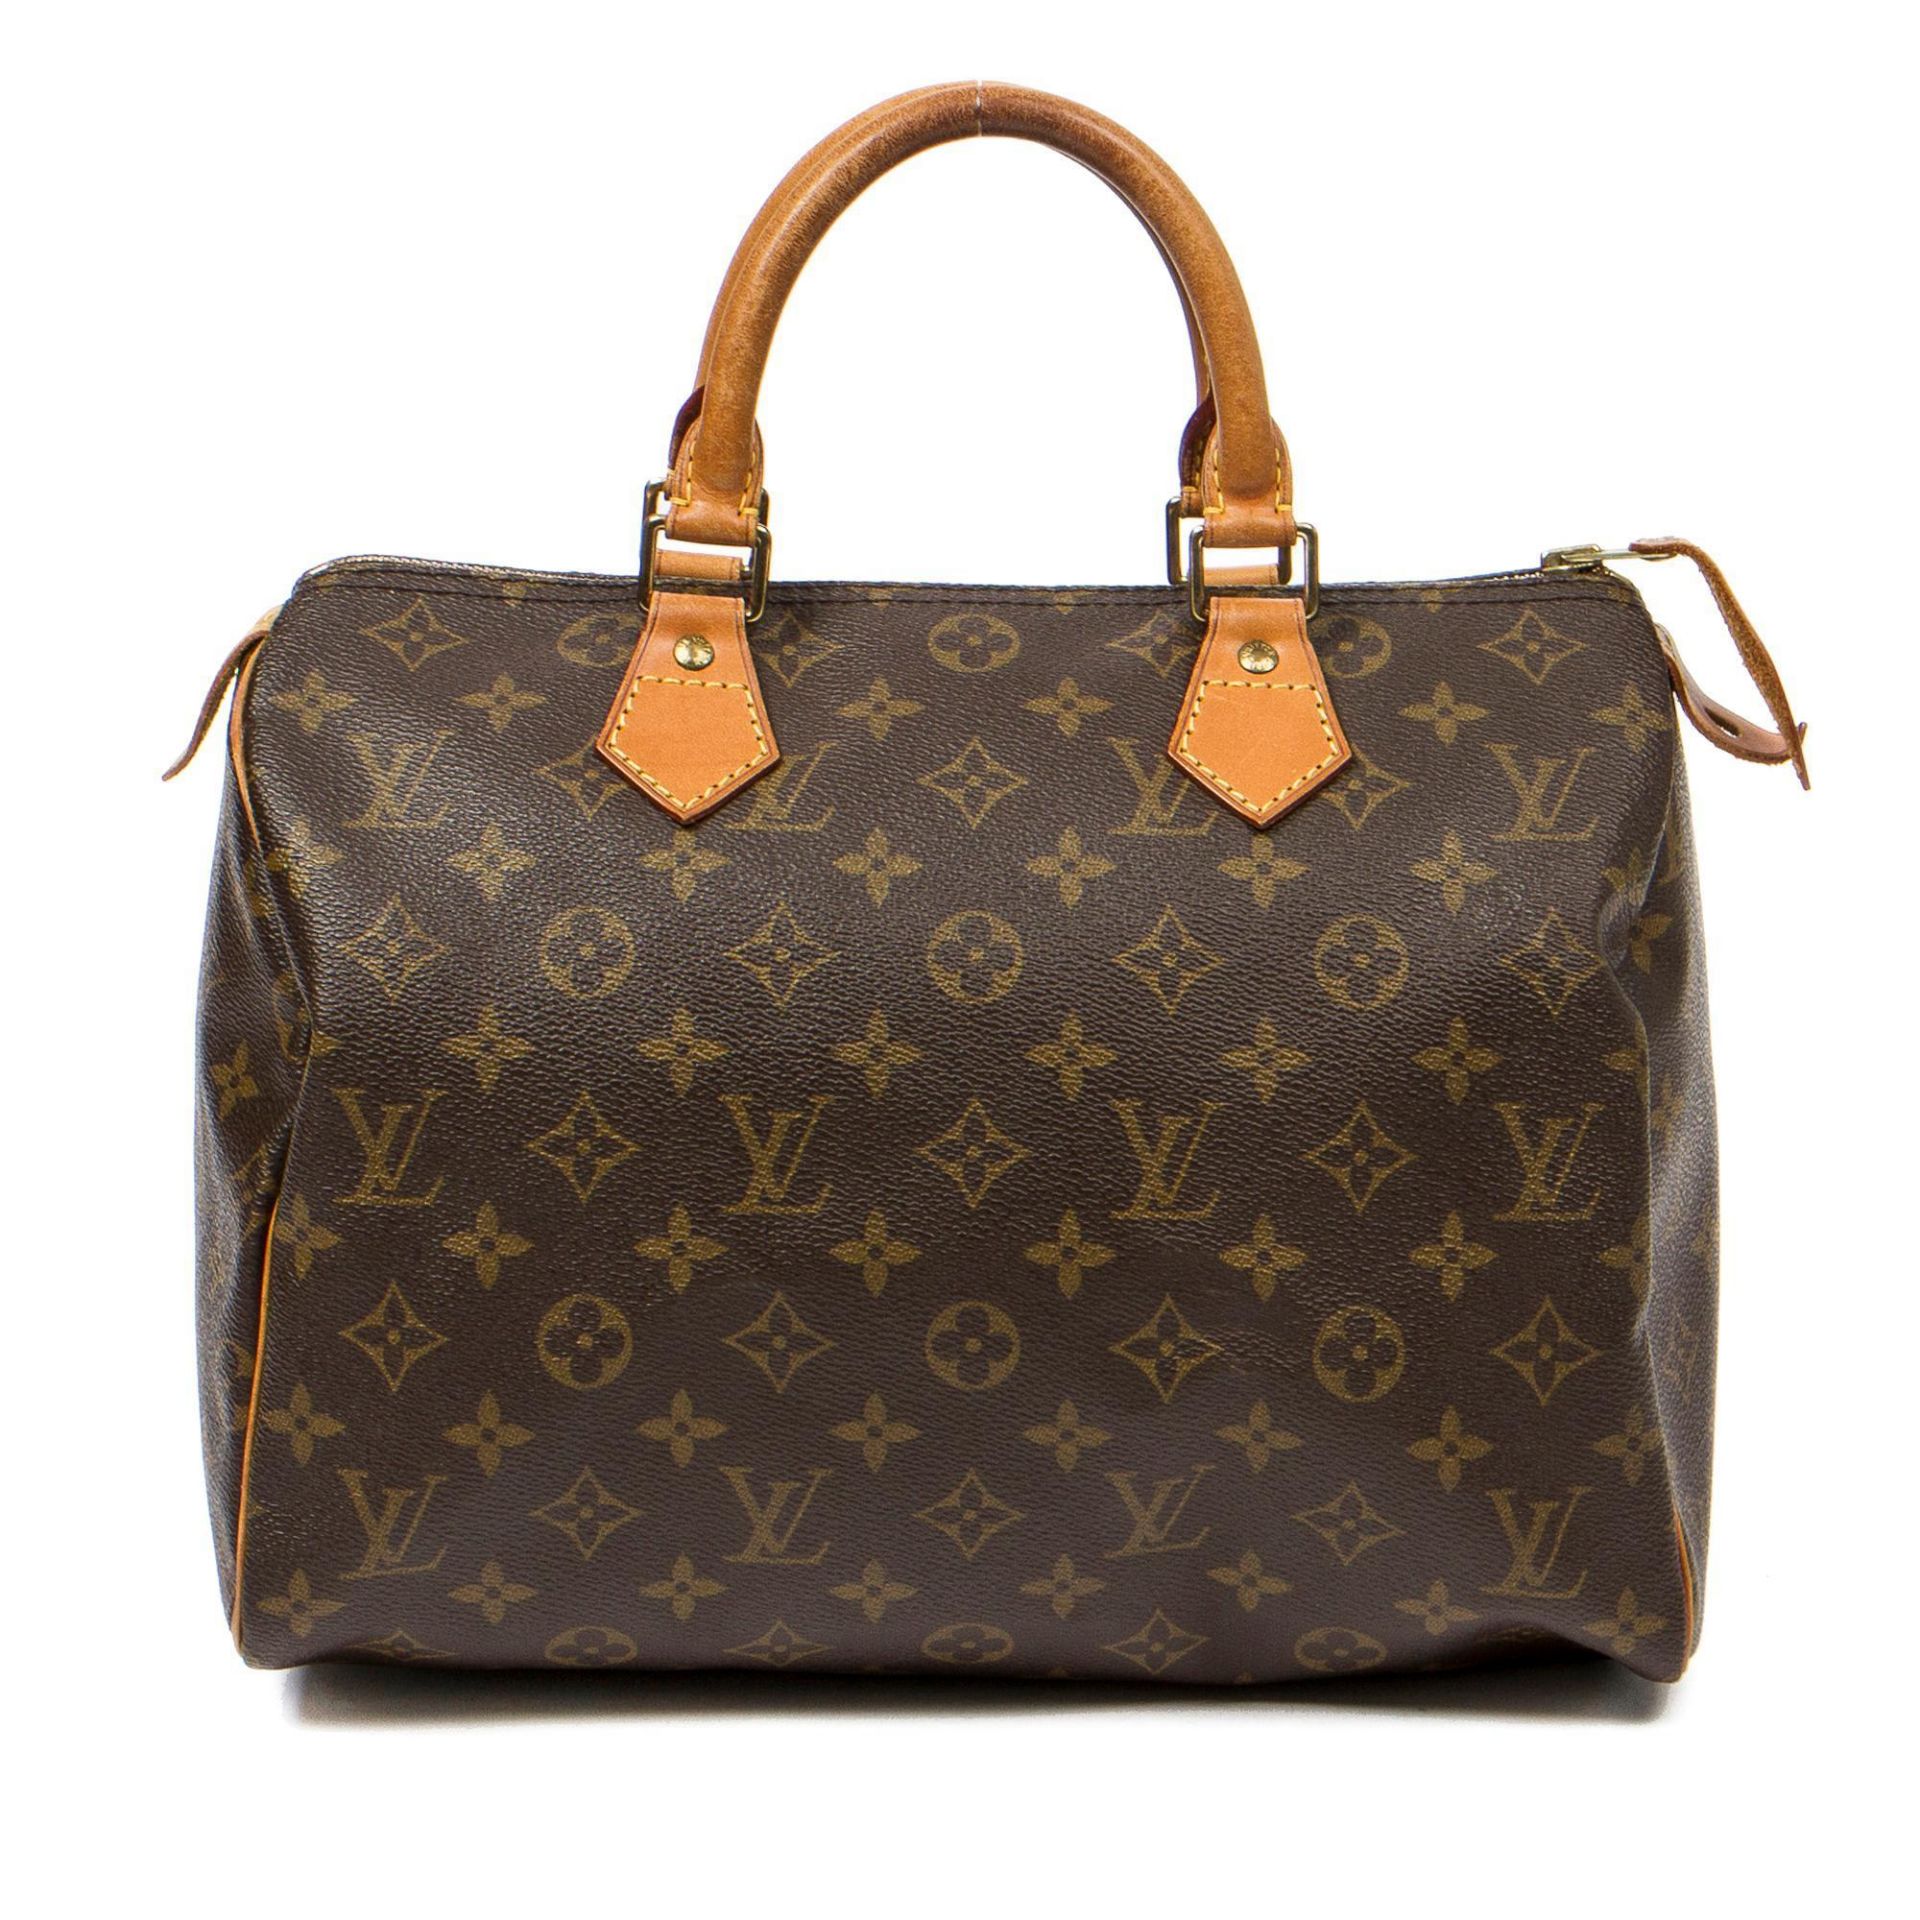 Louis Vuitton Brown Speedy Handbag - Image 2 of 15